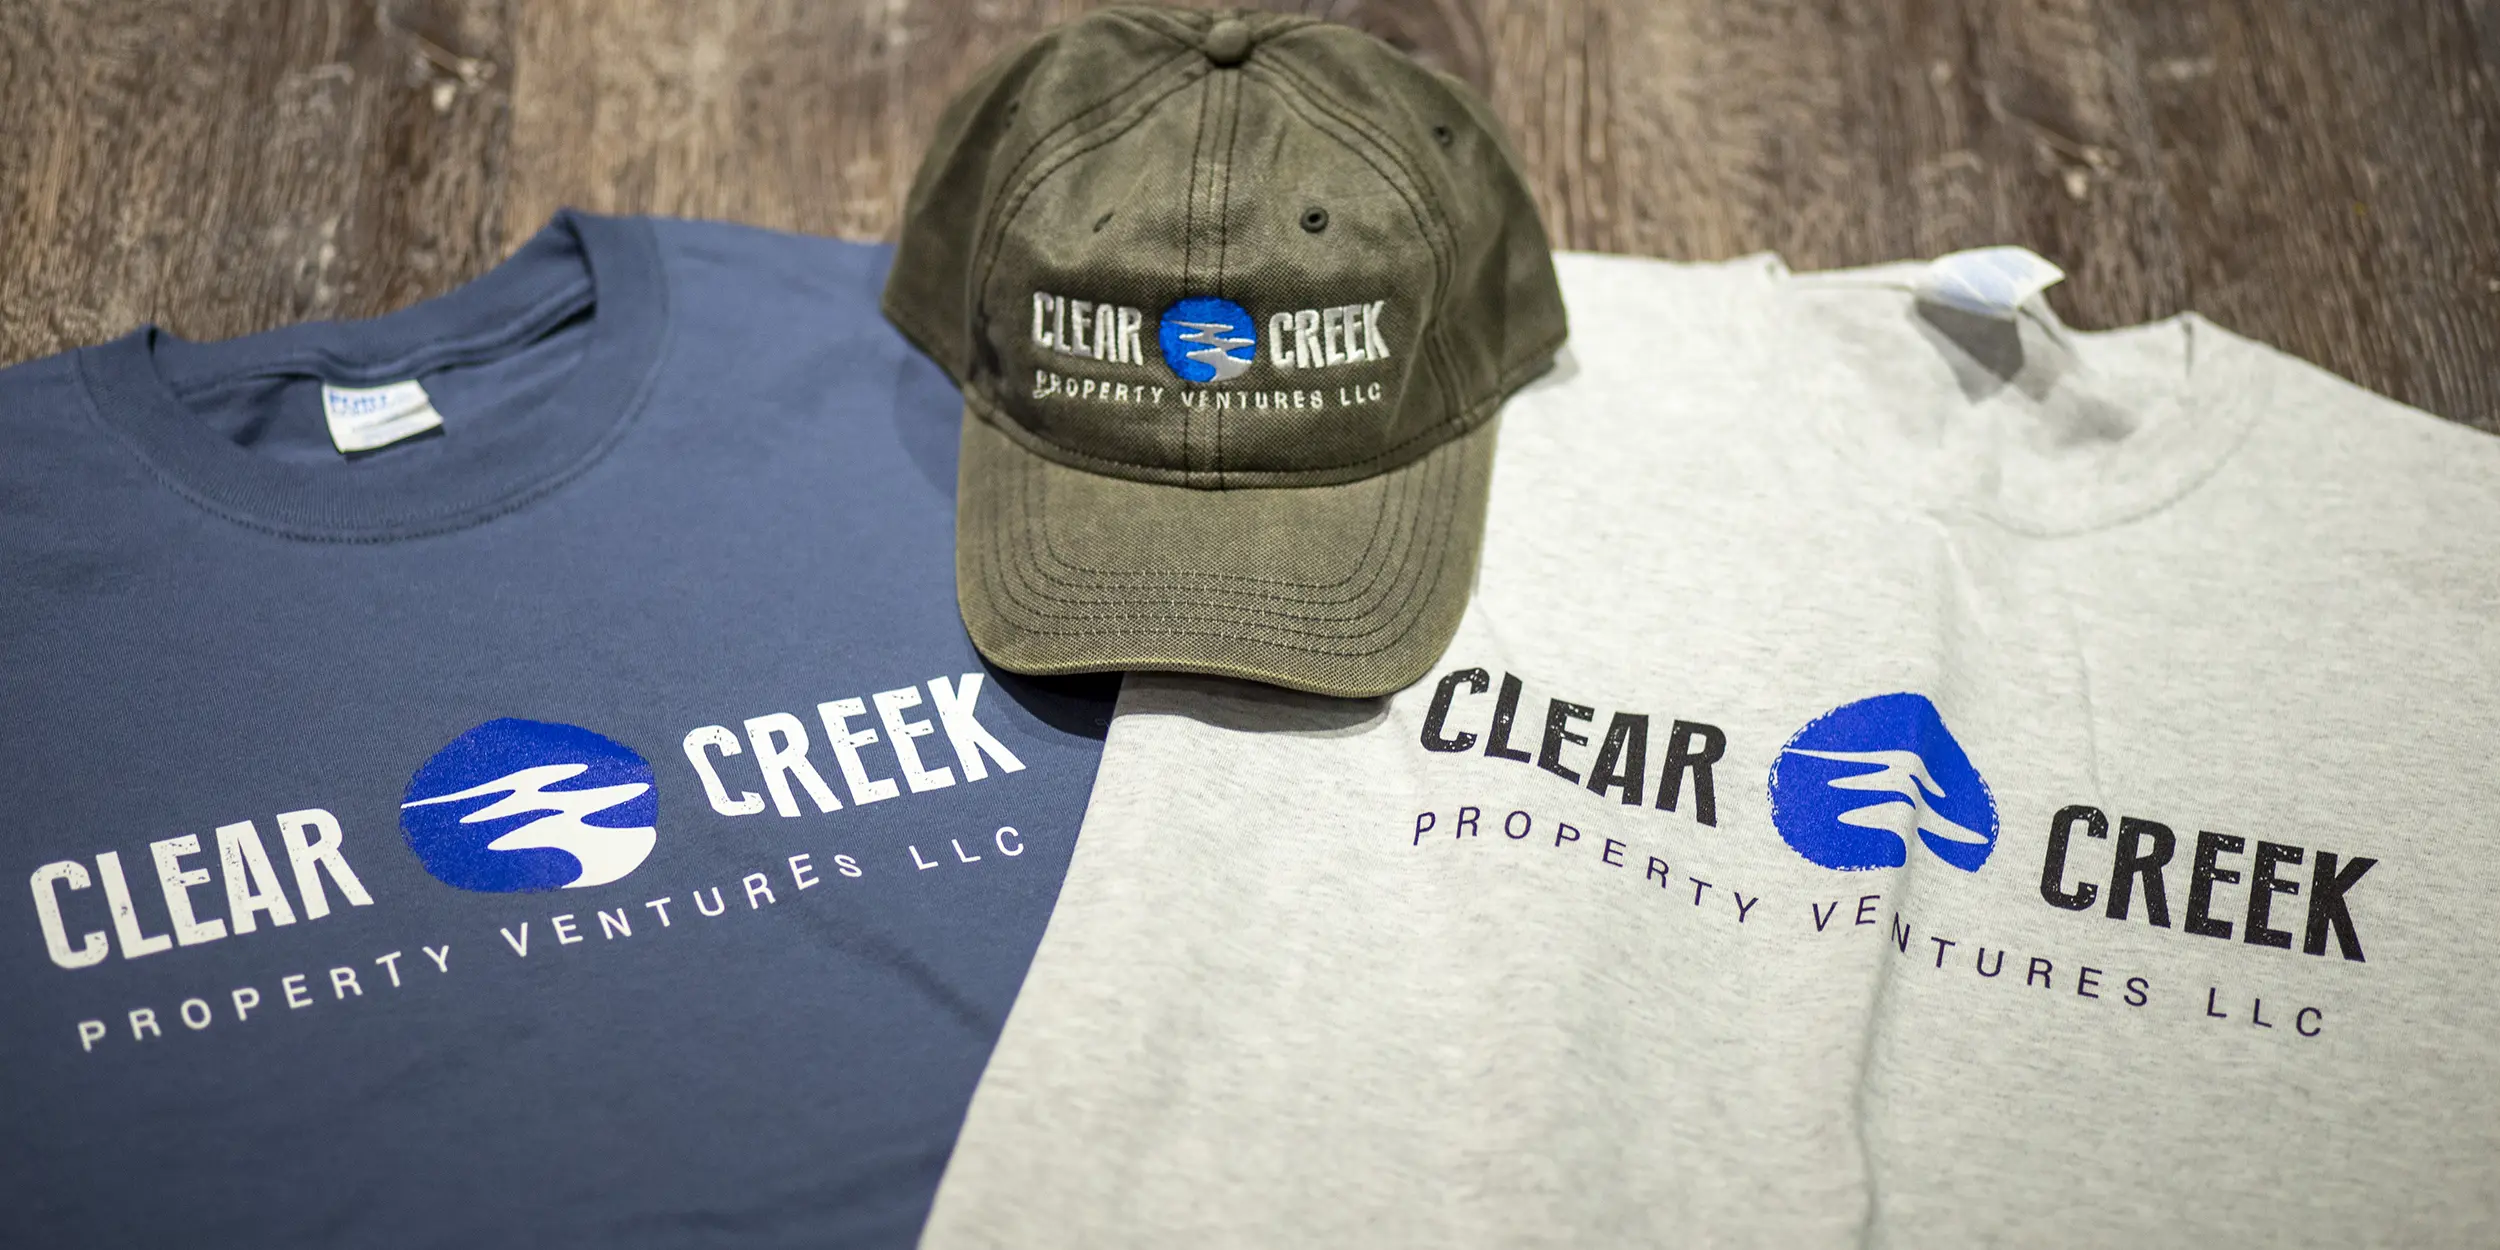 Clear Creek Property Ventures